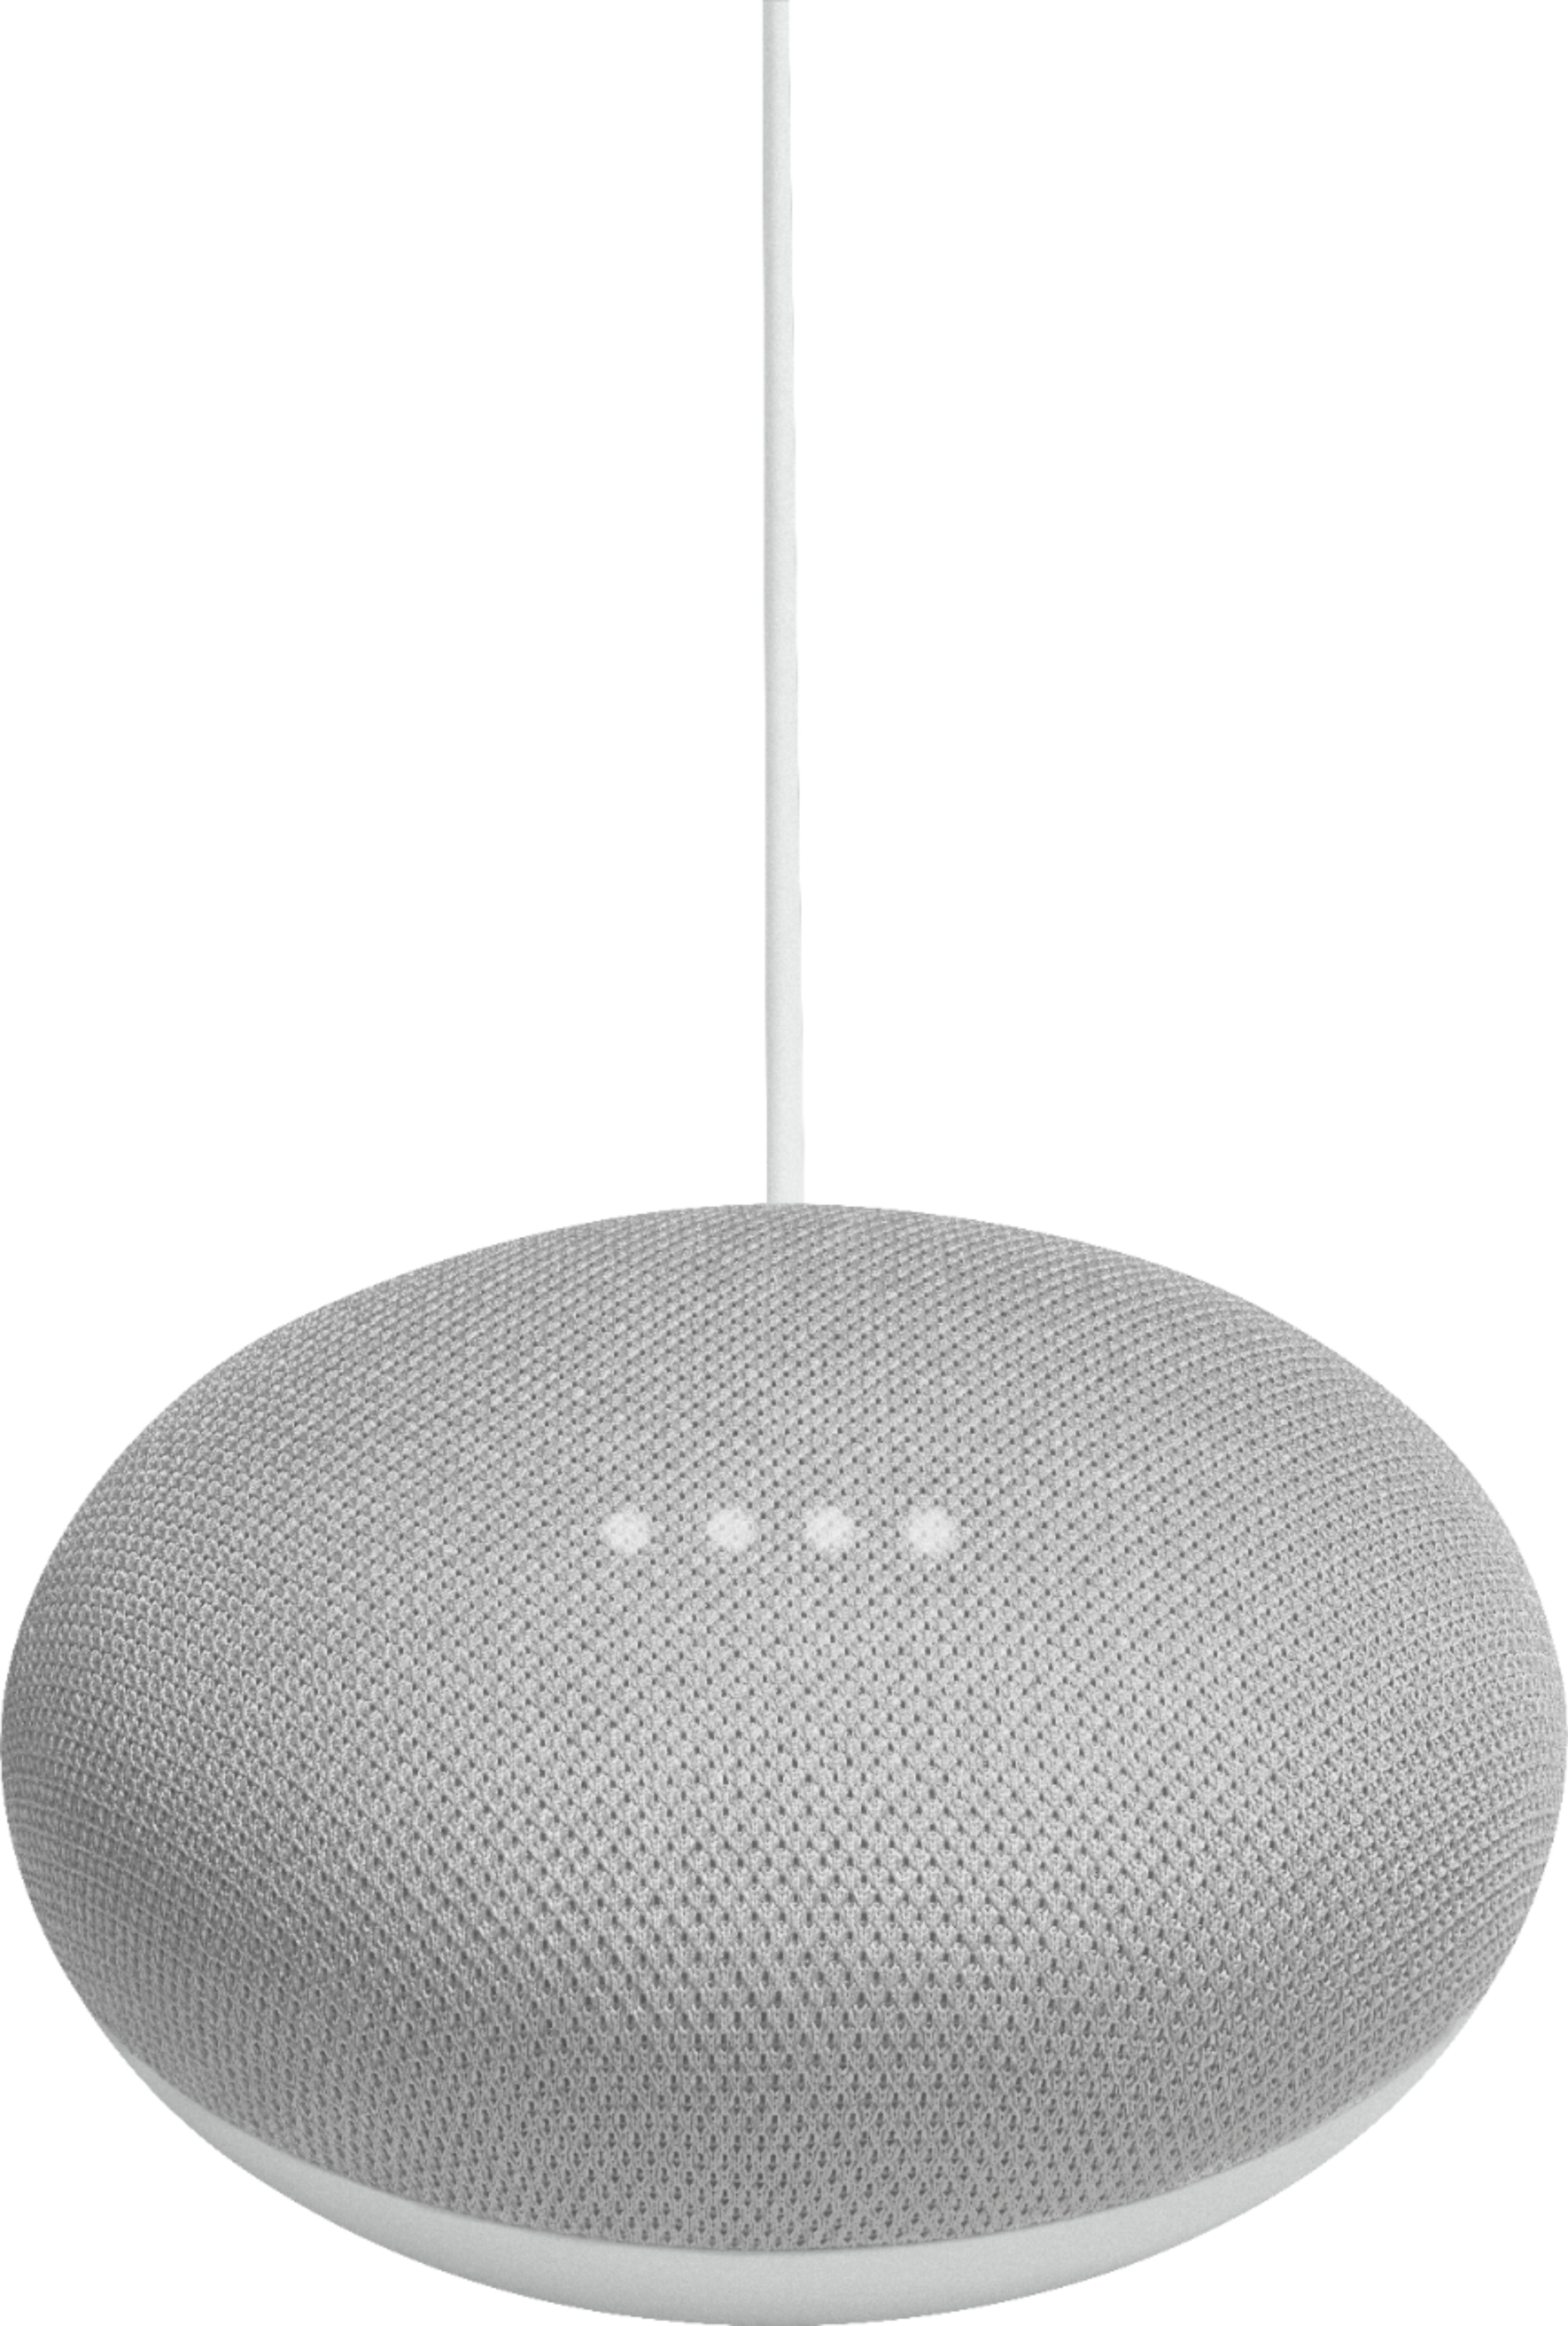 BRAND NEW-SHIPS WORLDWIDE Smart Small Speaker Chalk Grey Google Home Mini 